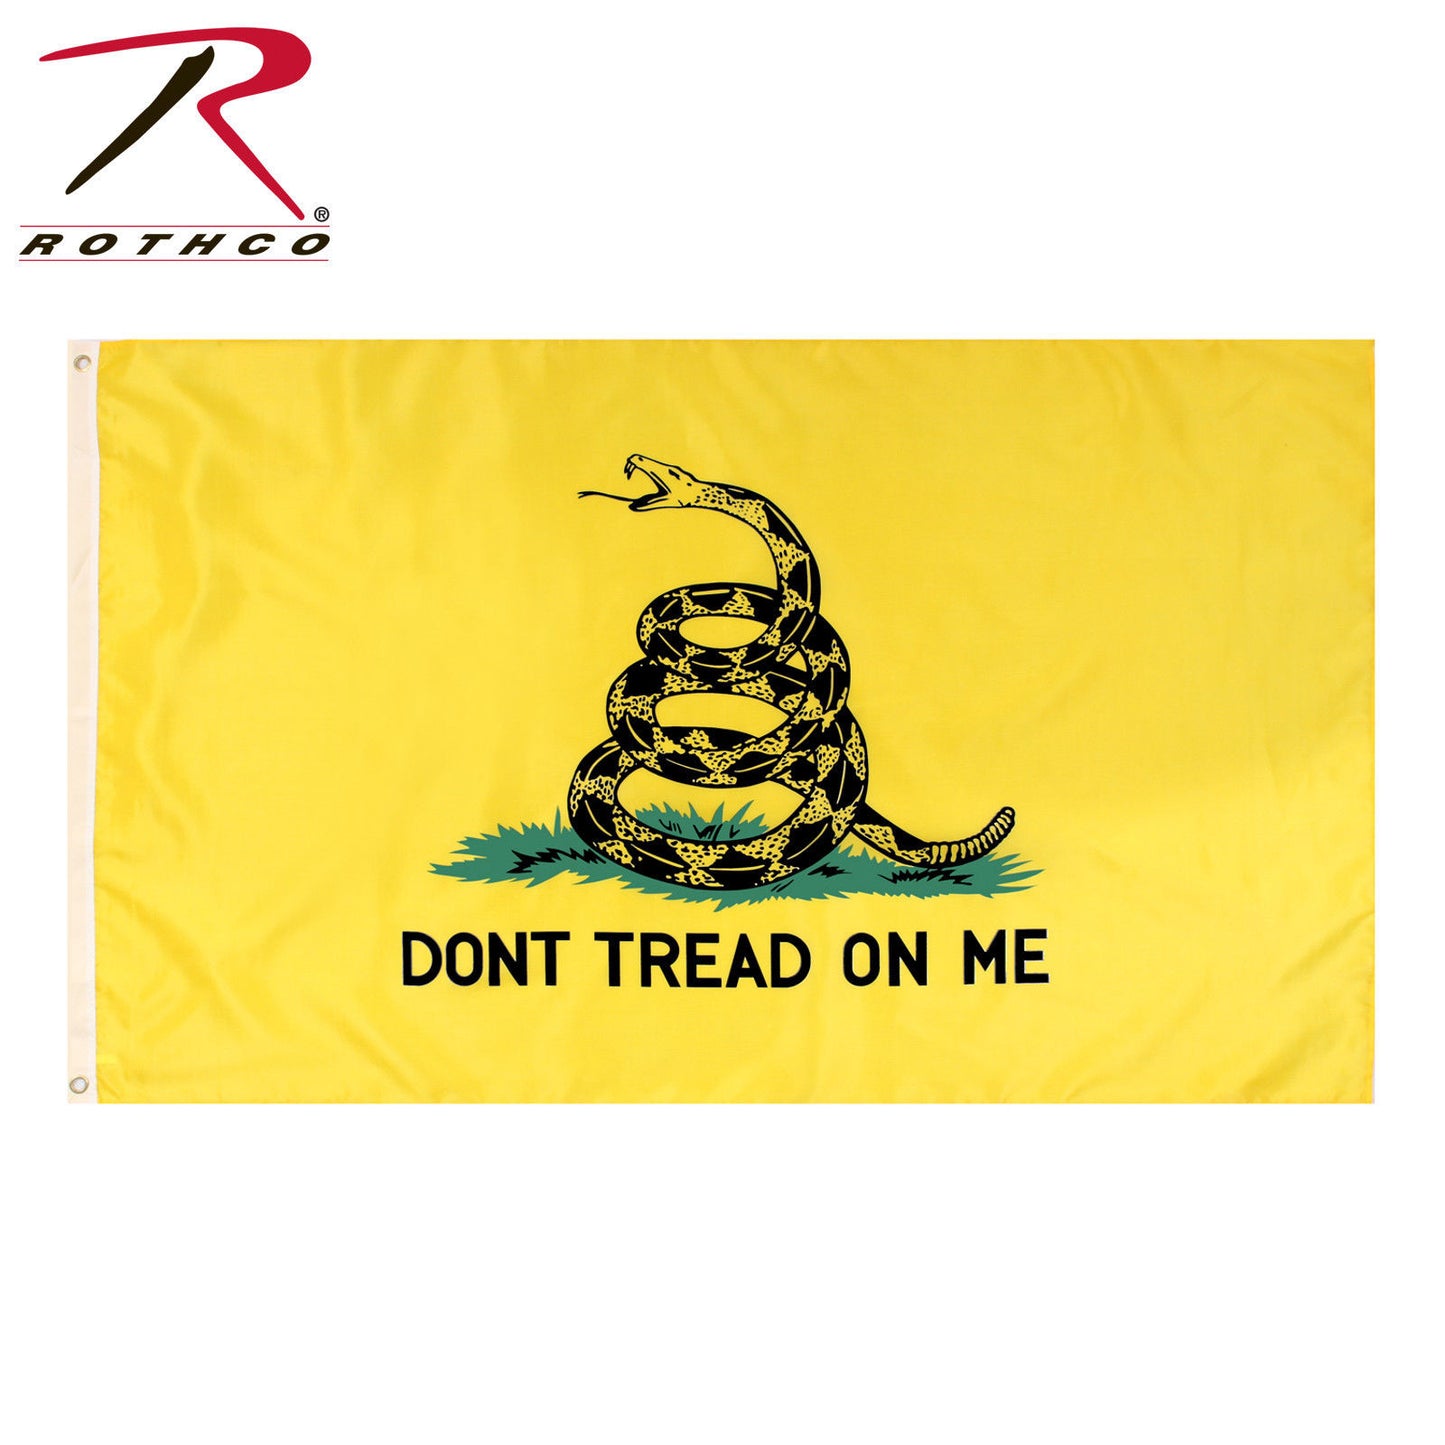 Rothco "Don't Tread On Me" Flag - Yellow Flag With Gadsden Snake